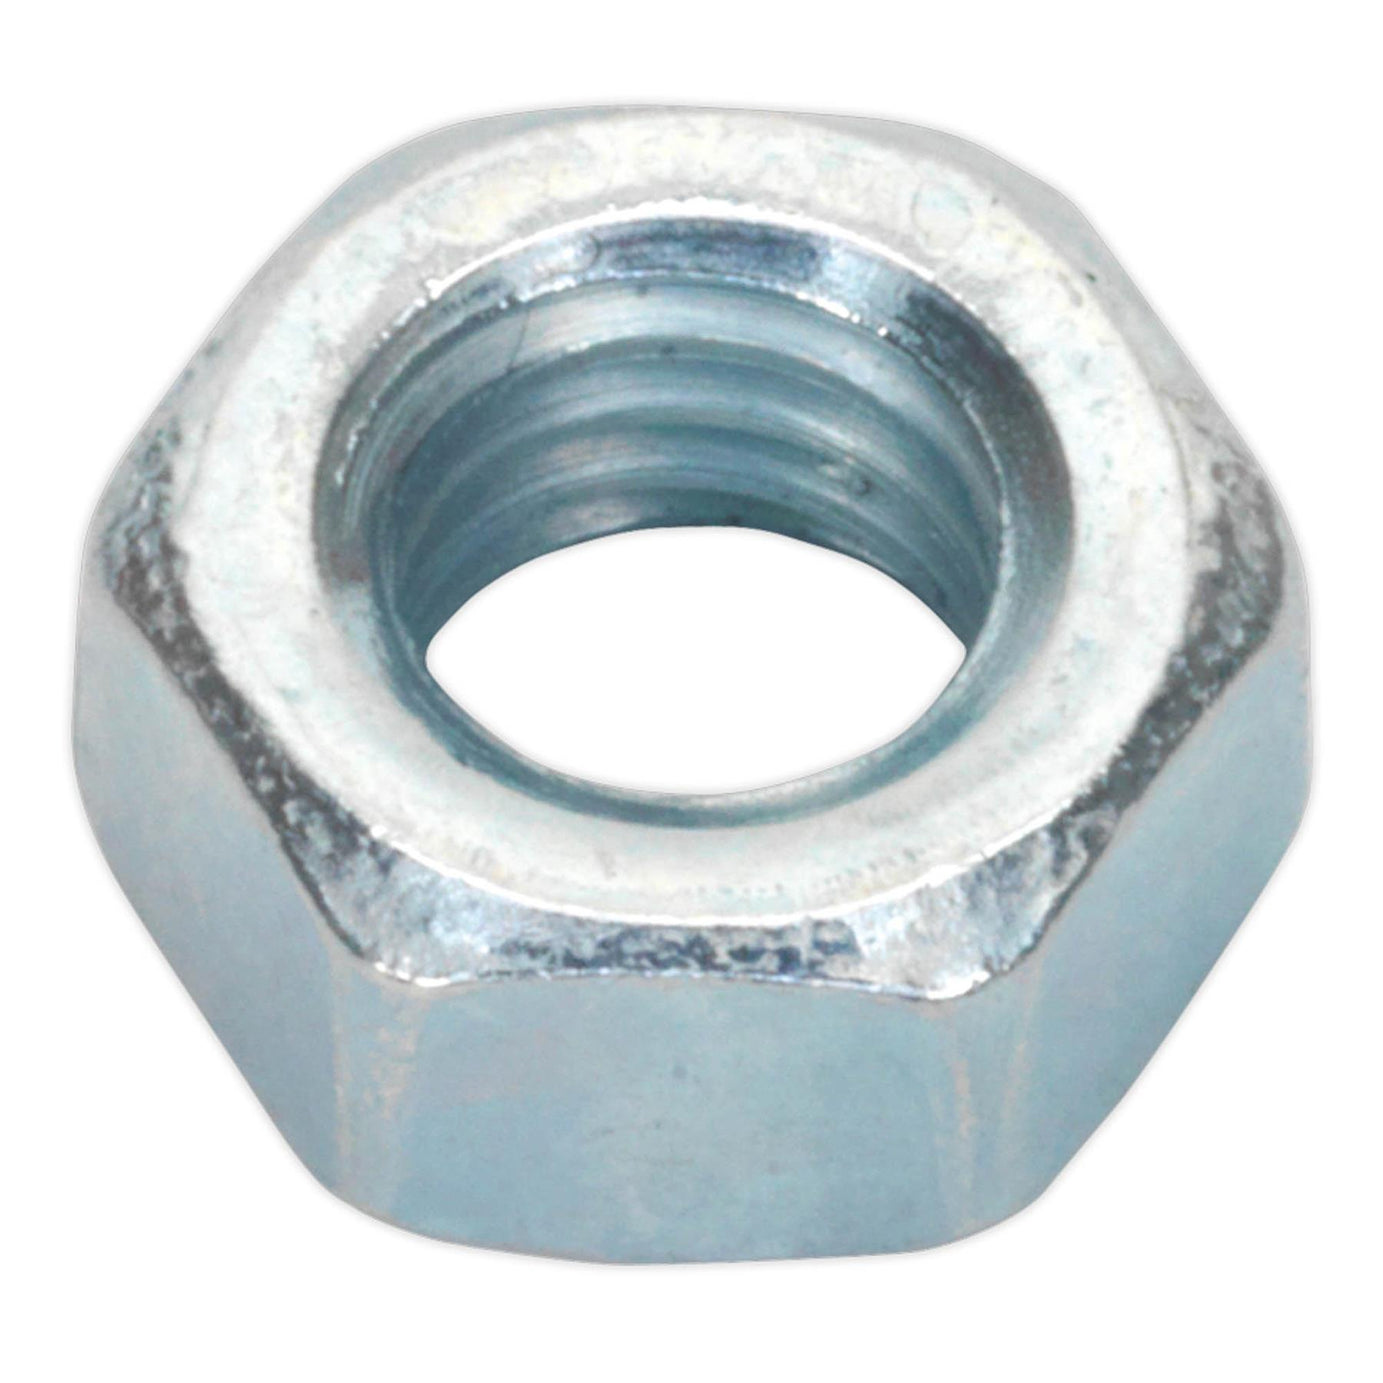 Sealey Steel Nut DIN 934 - M5 - Pack of 100